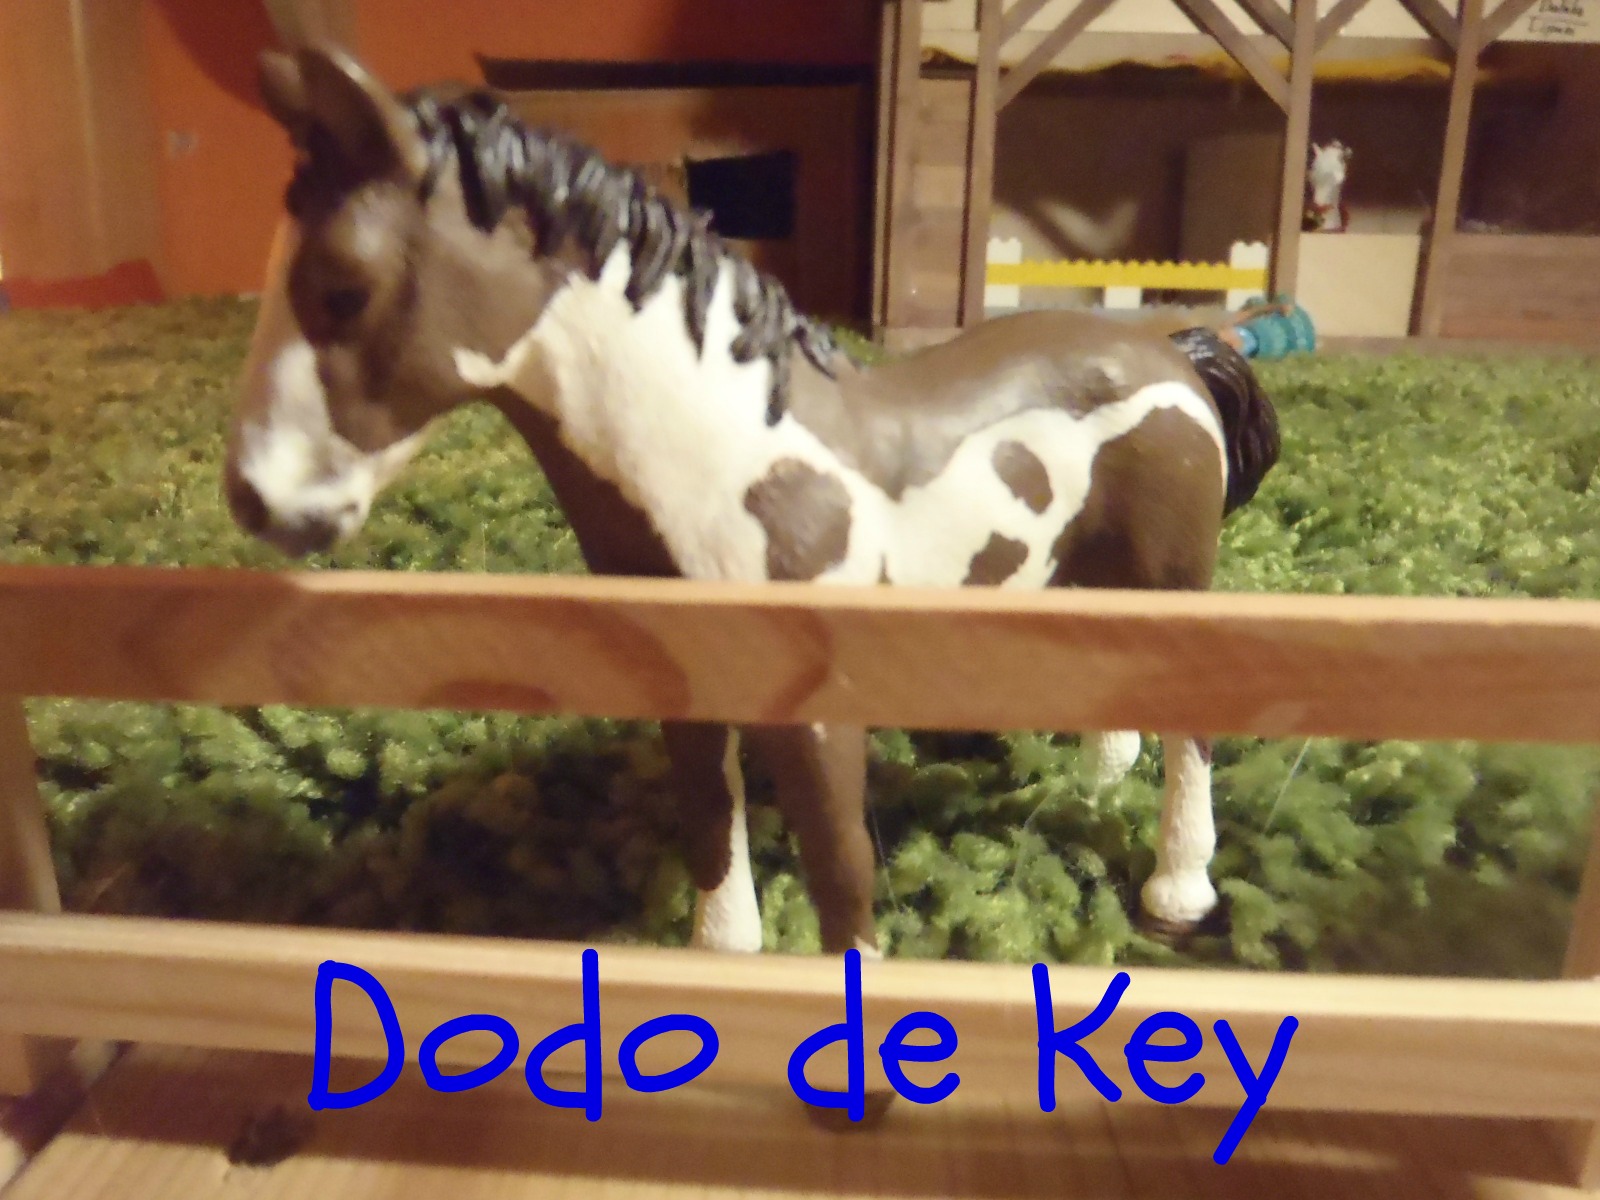 Dodo de Key